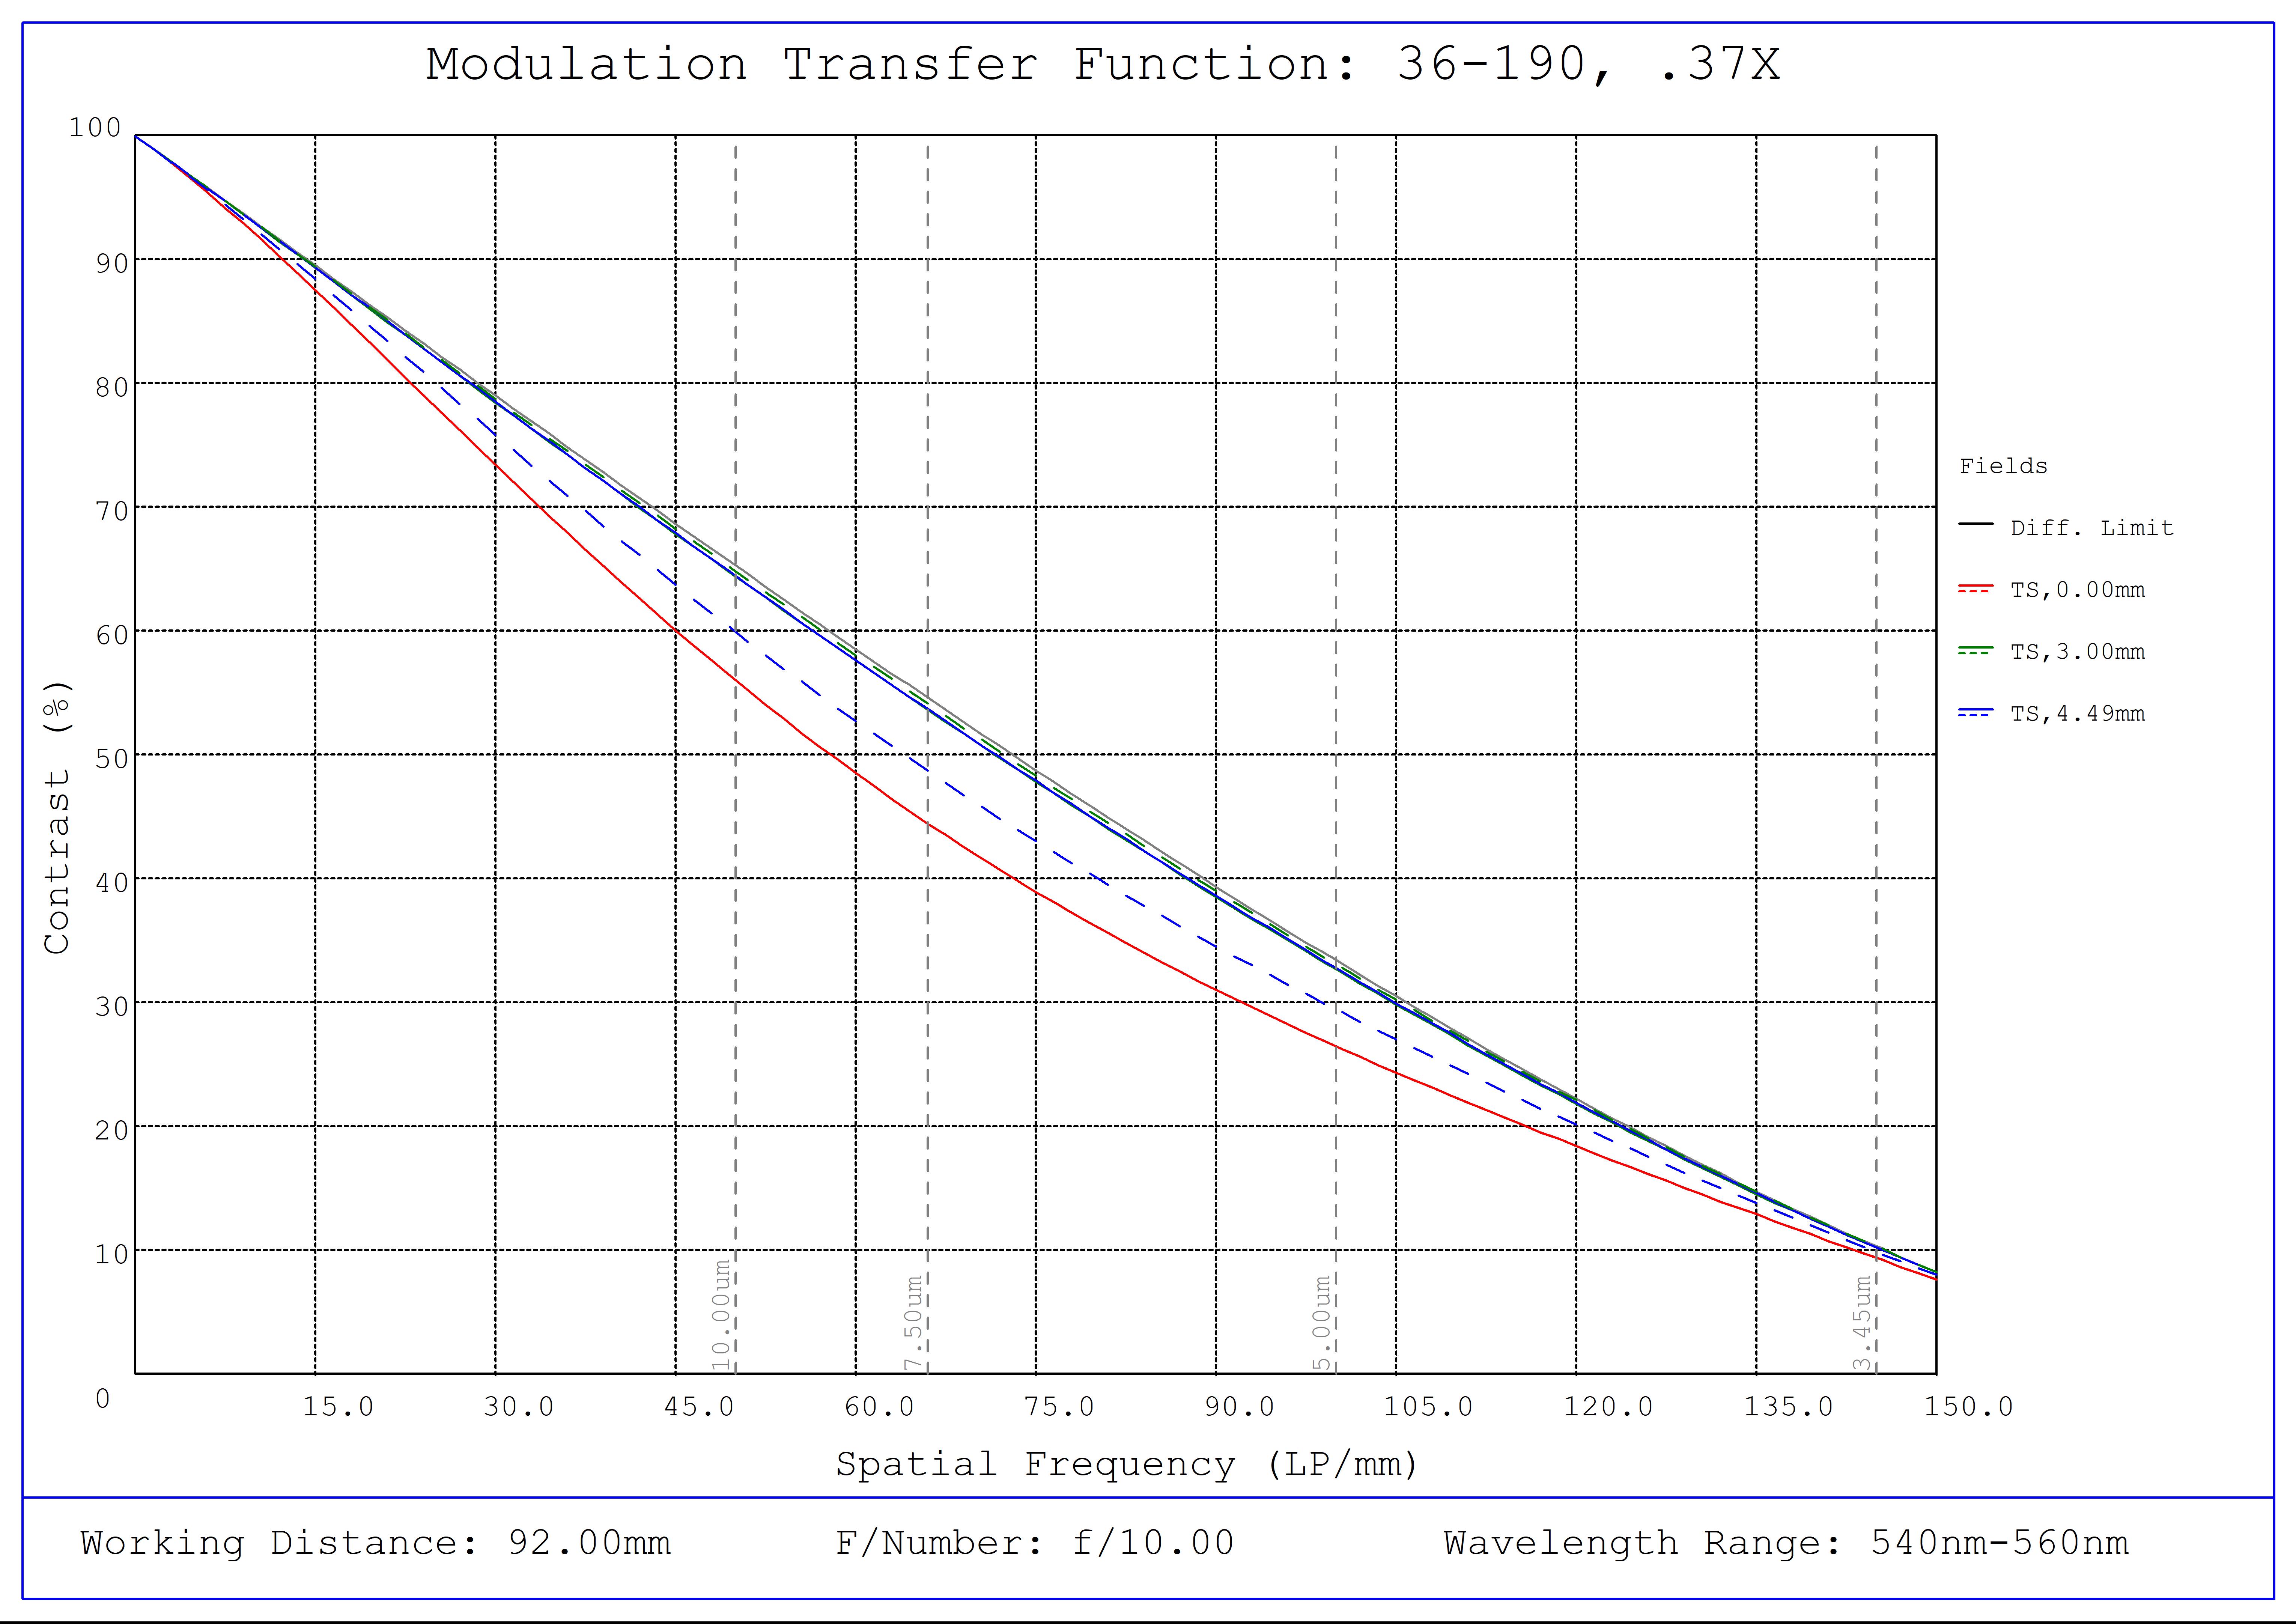 #36-190, 0.37X MercuryTL™ Liquid Lens Telecentric Lens, Modulated Transfer Function (MTF) Plot, 92mm Working Distance, f10